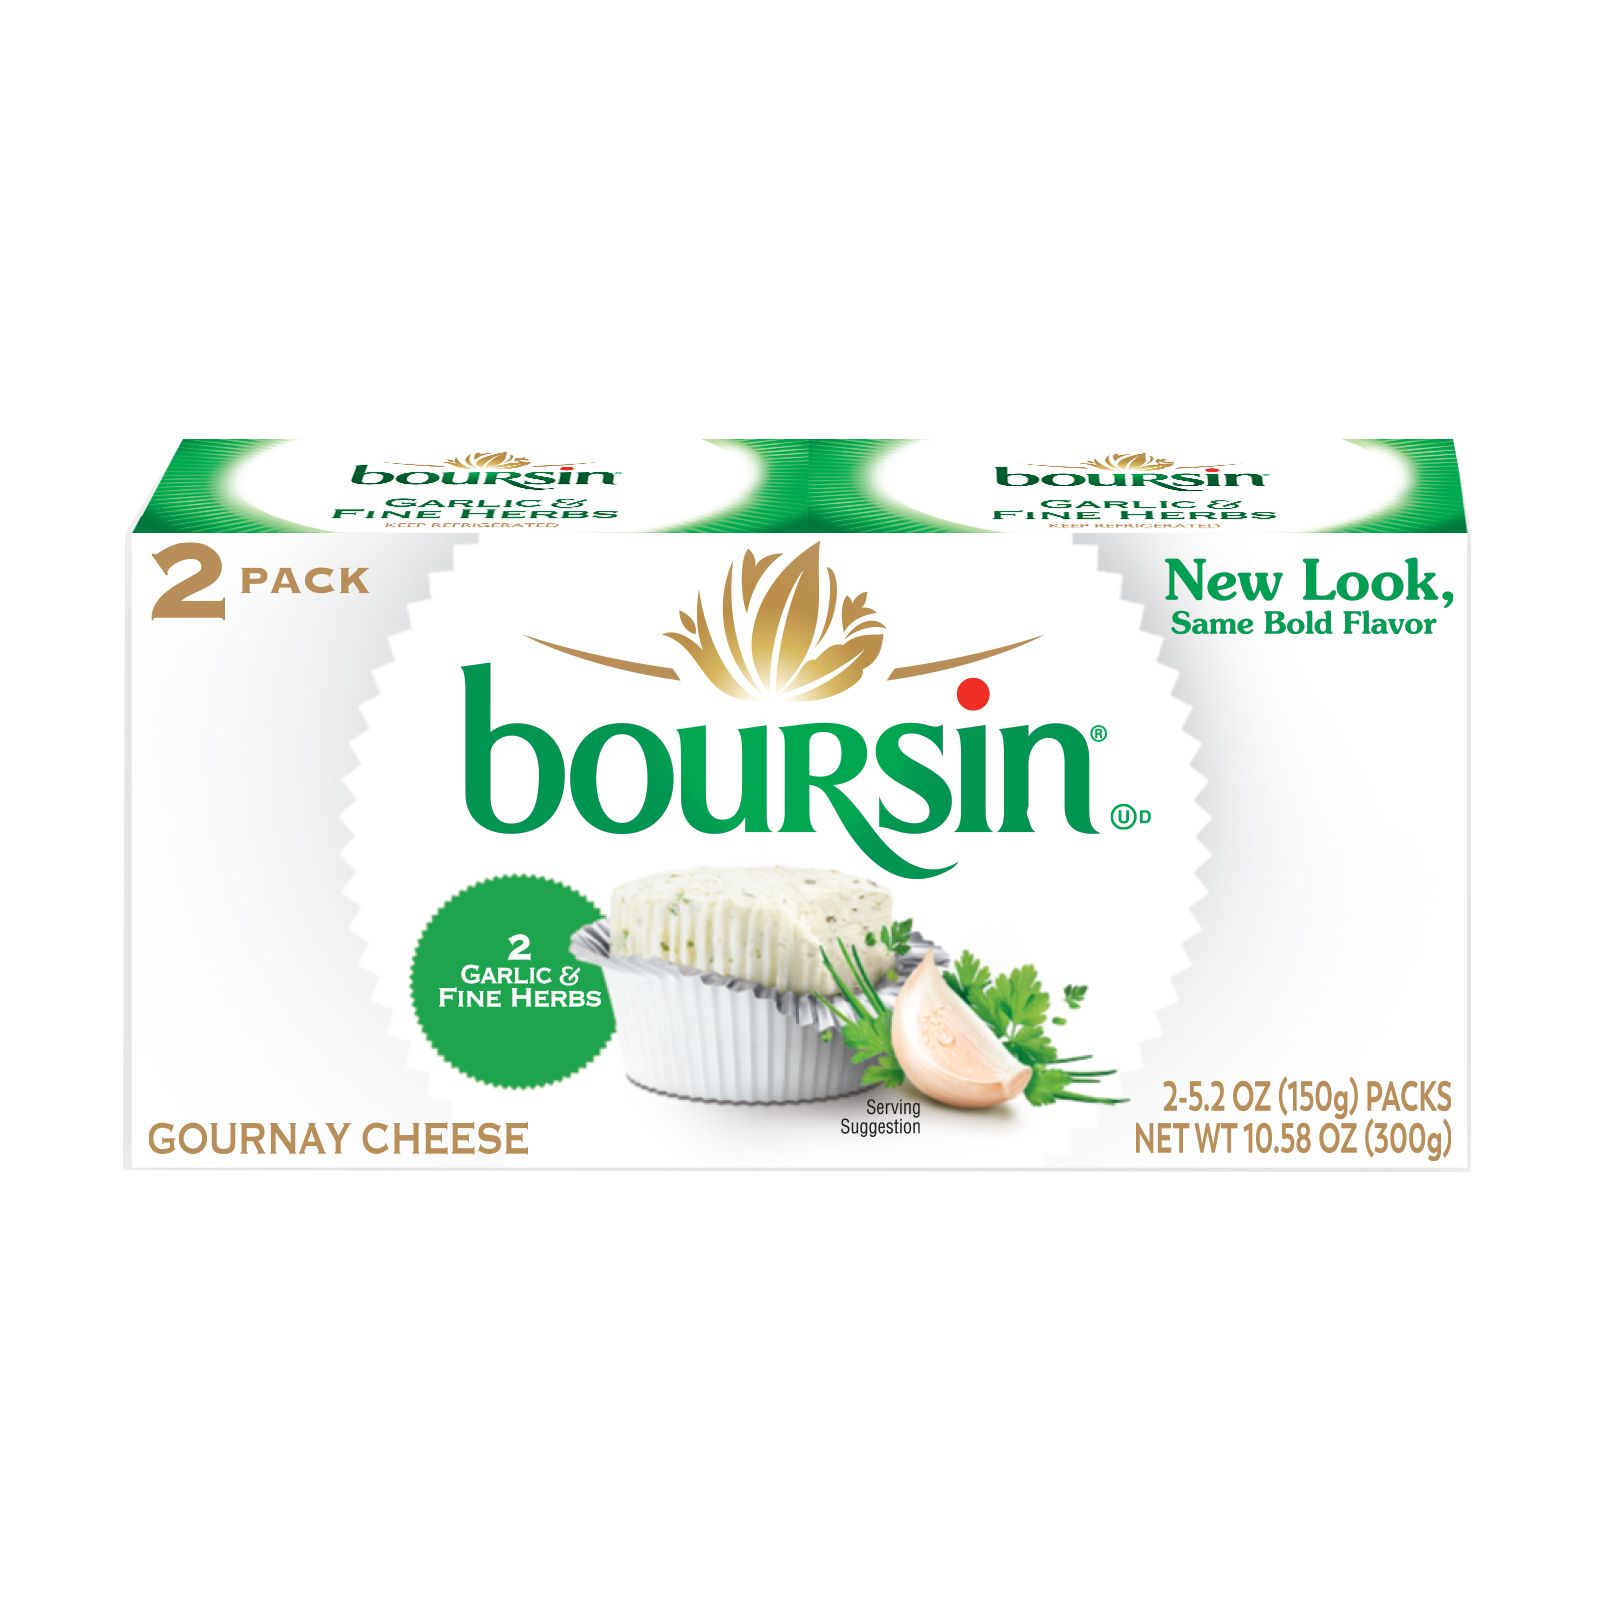 Boursin Garlic and Fine Herbs Gournay Cheese, 2 pk./5.2 oz.